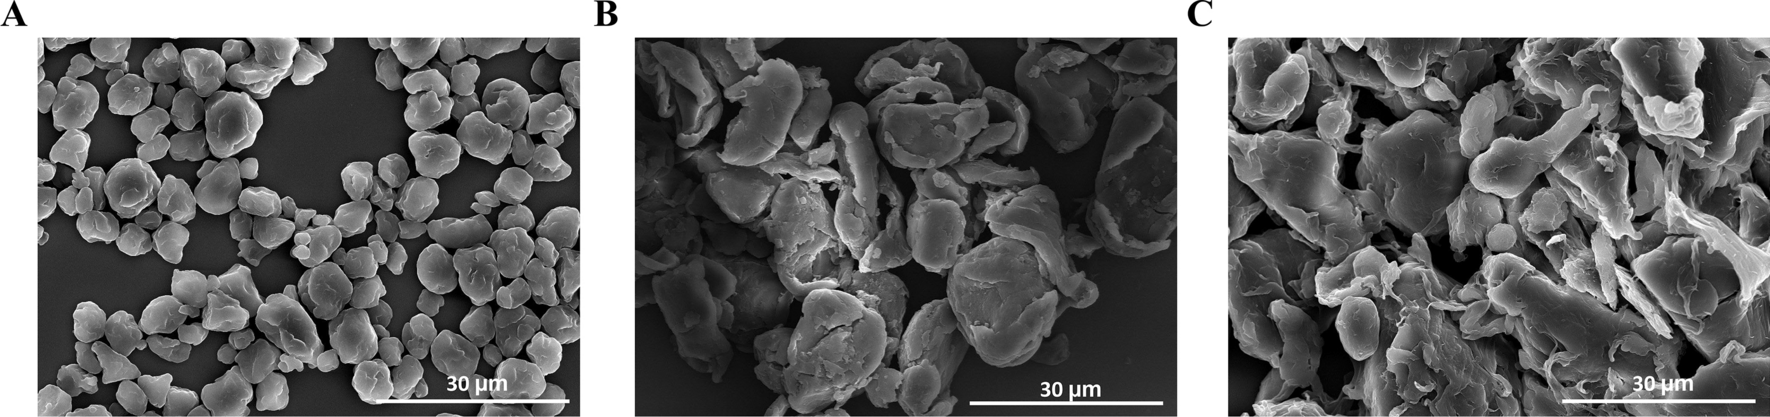 Pulmonary toxicity assessment of polypropylene, polystyrene, and polyethylene microplastic fragments in mice